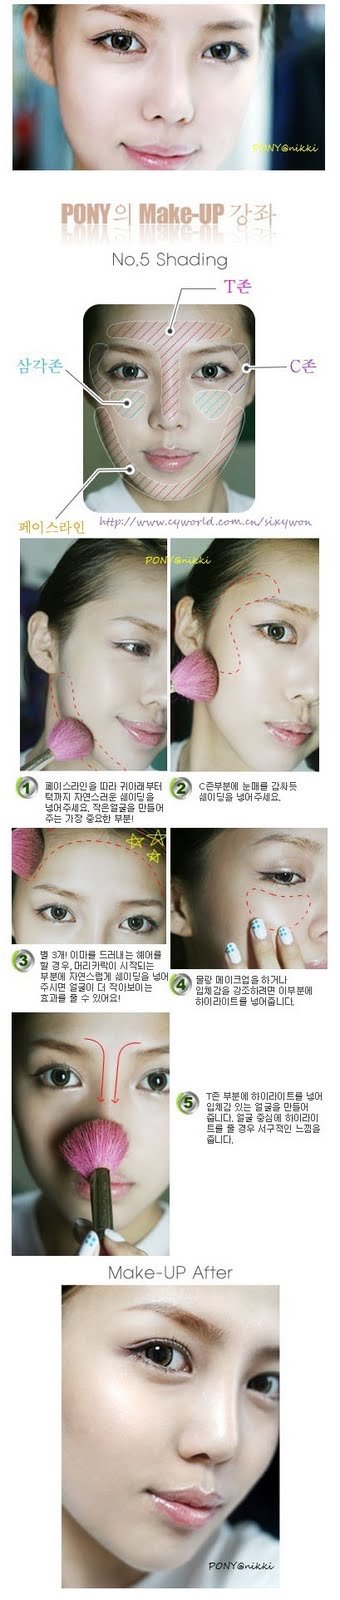 shading-makeup-tutorial-70_5 Arcering make-up tutorial